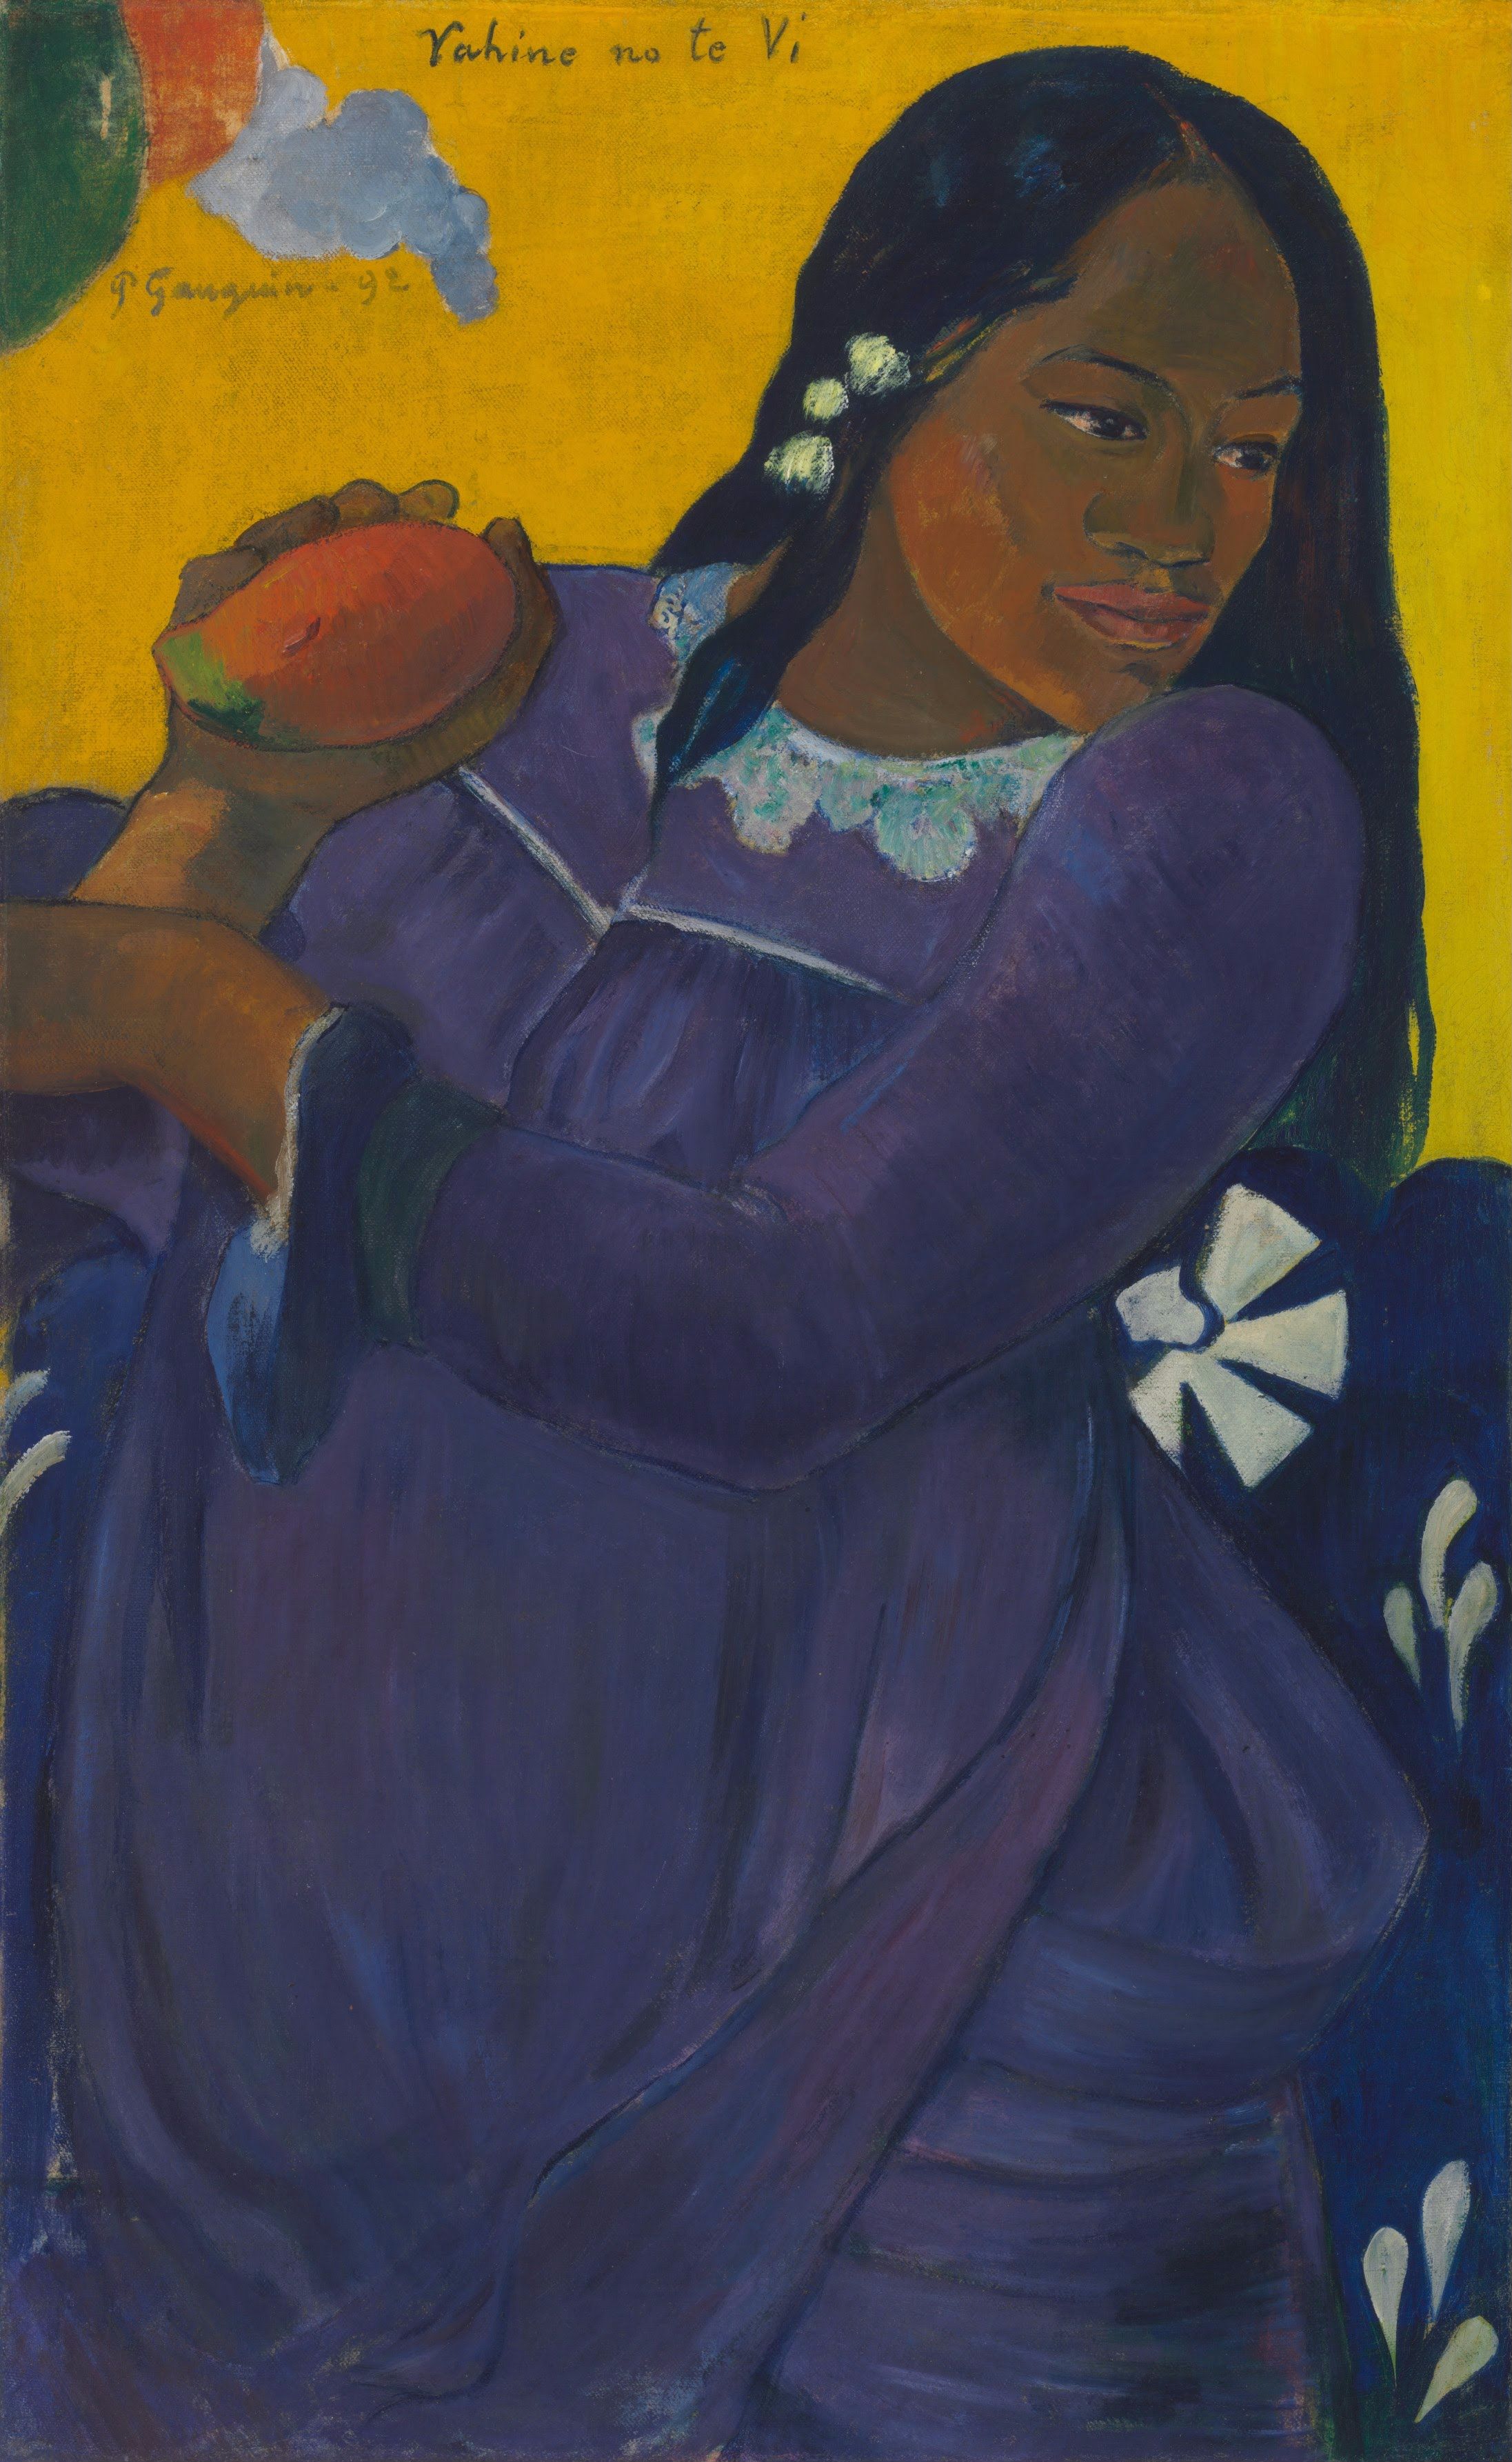 Vahine no te vi (Žena s mangem) by Paul Gauguin - 1892 - 193.5 x 103 cm 